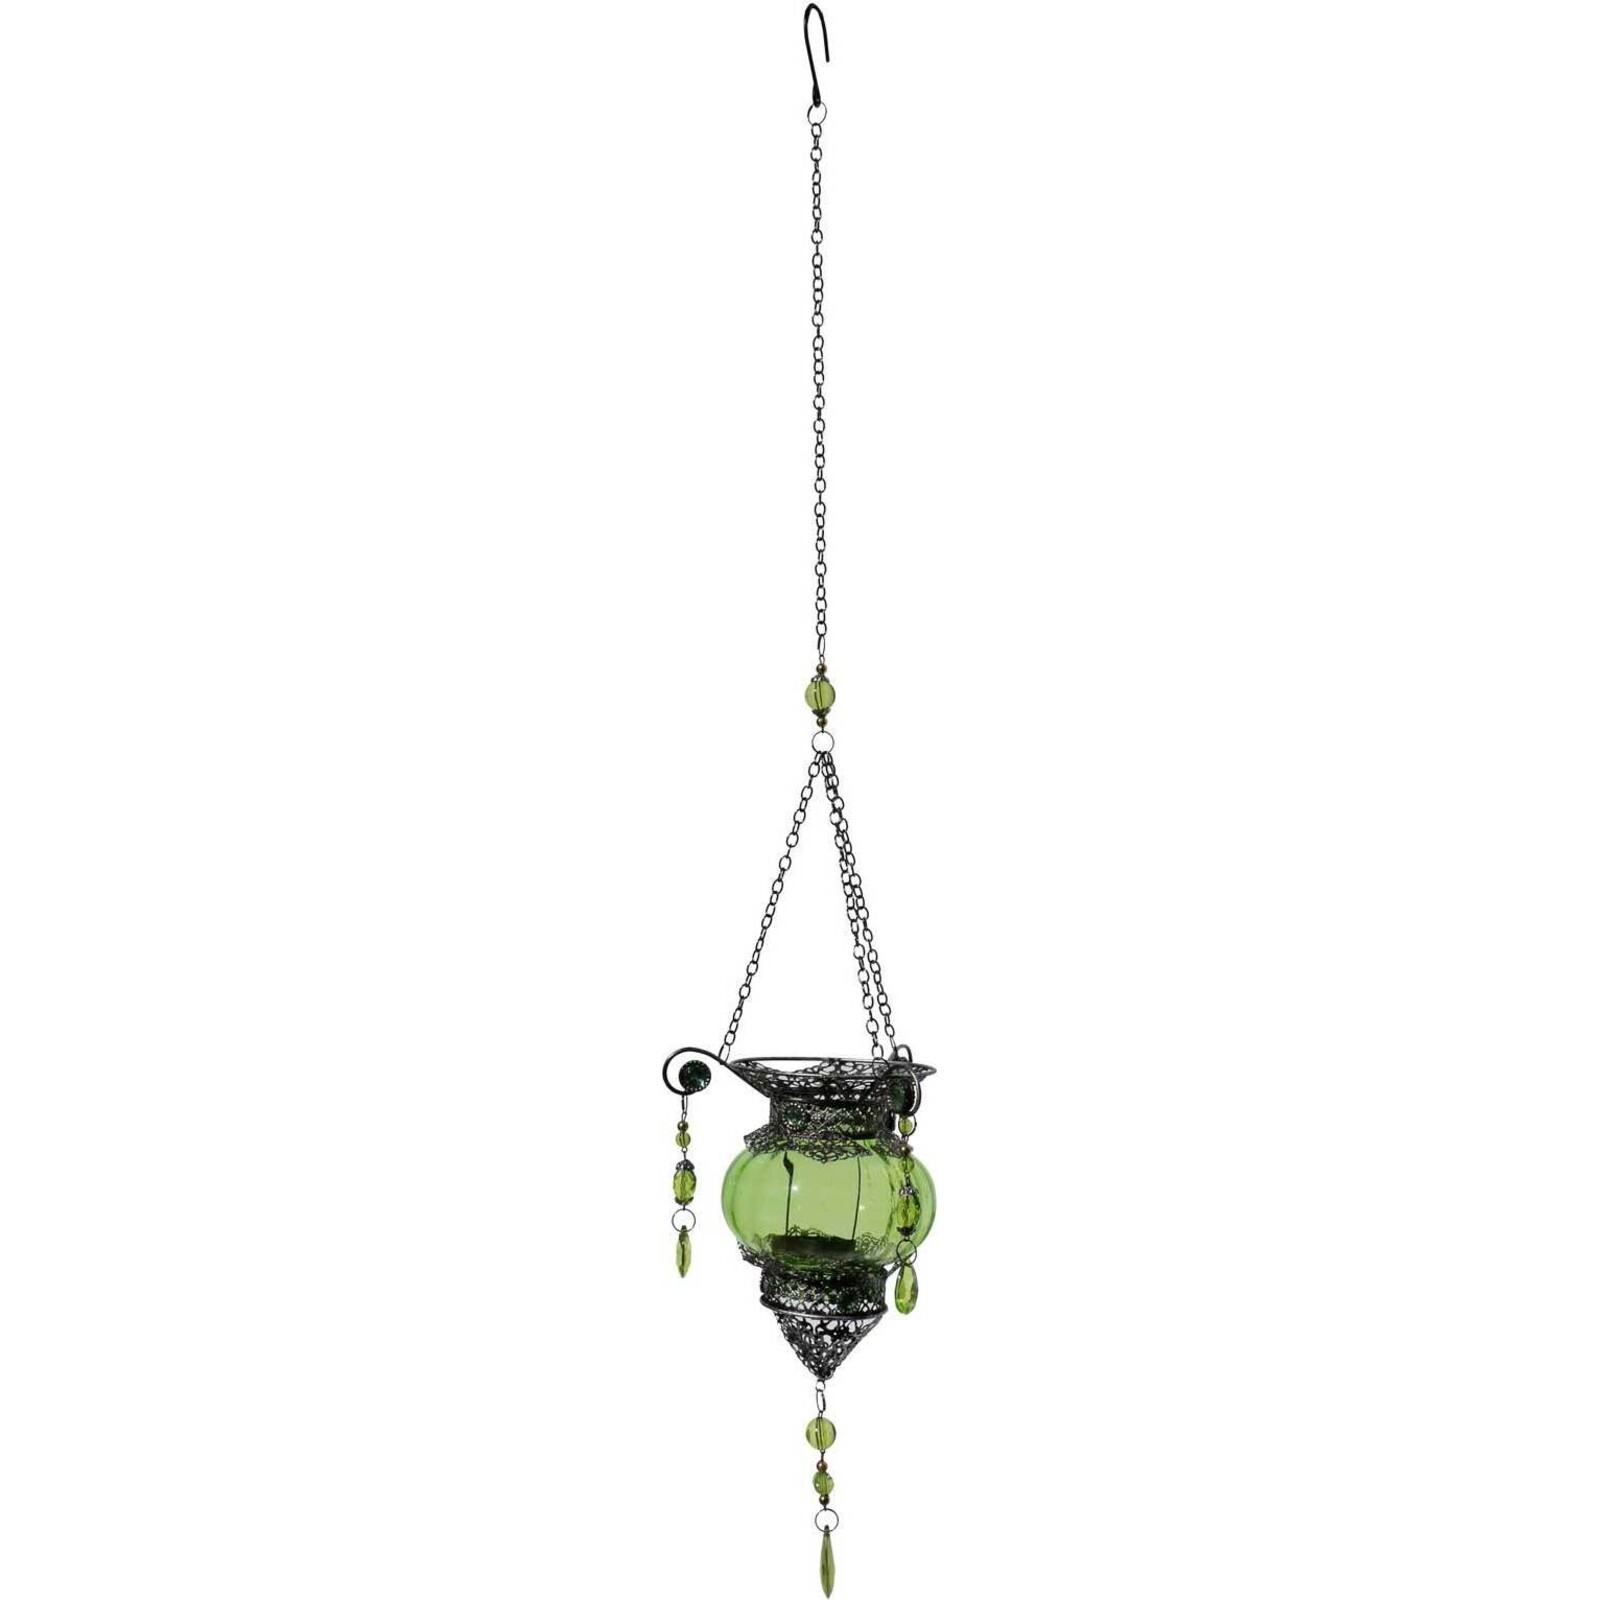 Hanging Morroc Lantern Green